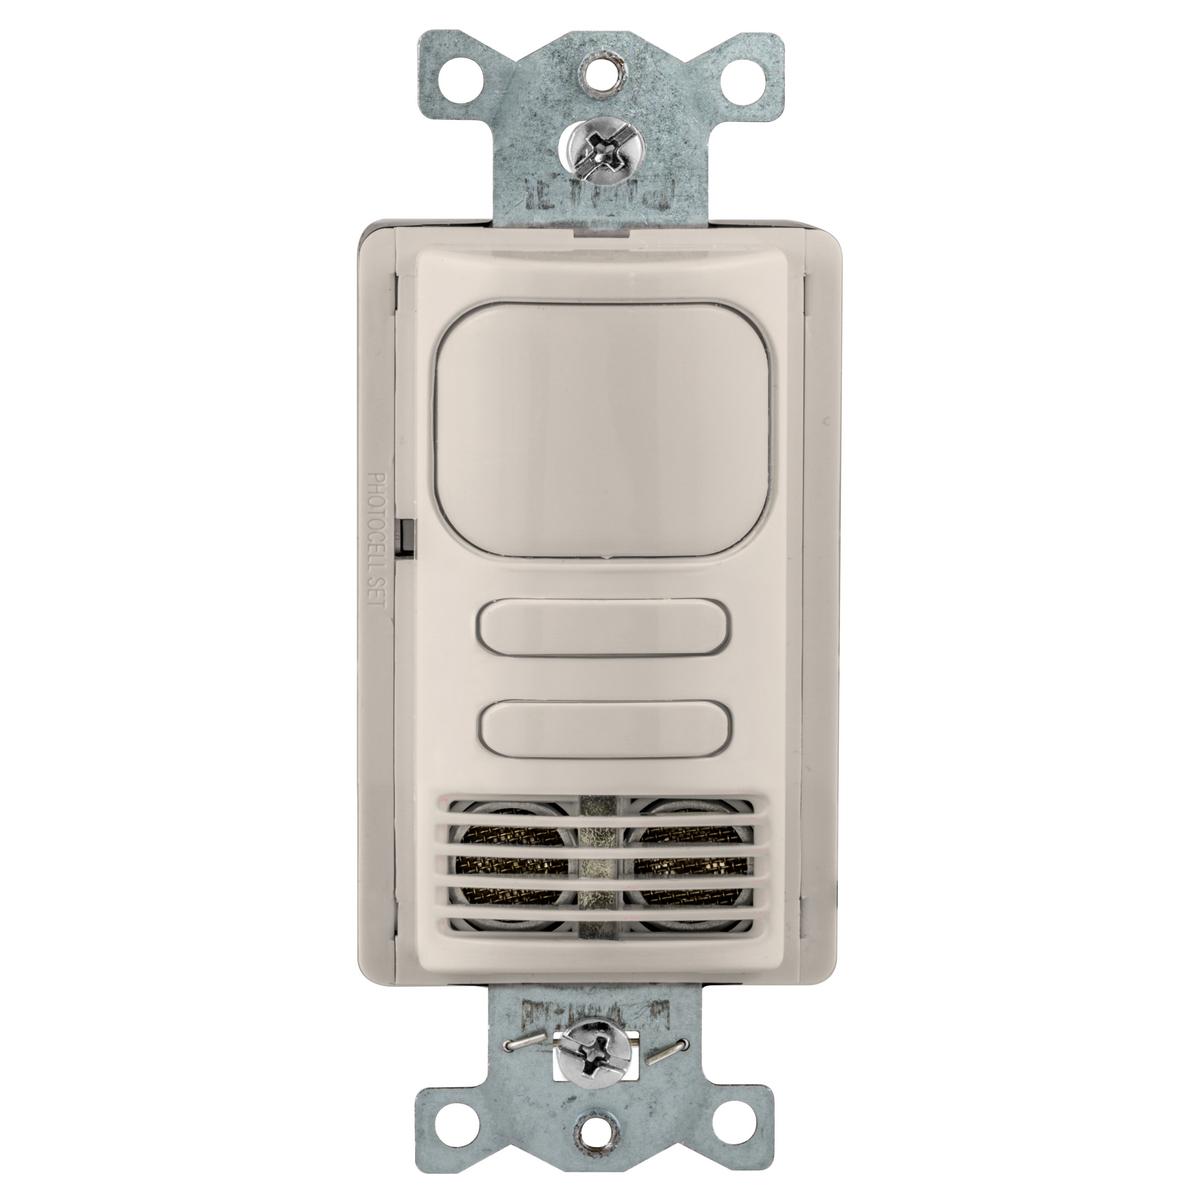 Hubbell AD2000LA22 Occupancy/Vacancy Sensors, Wall Switch,Adaptive Dual Technology, 2 Circuit, 120/277V AC, Light Almond 